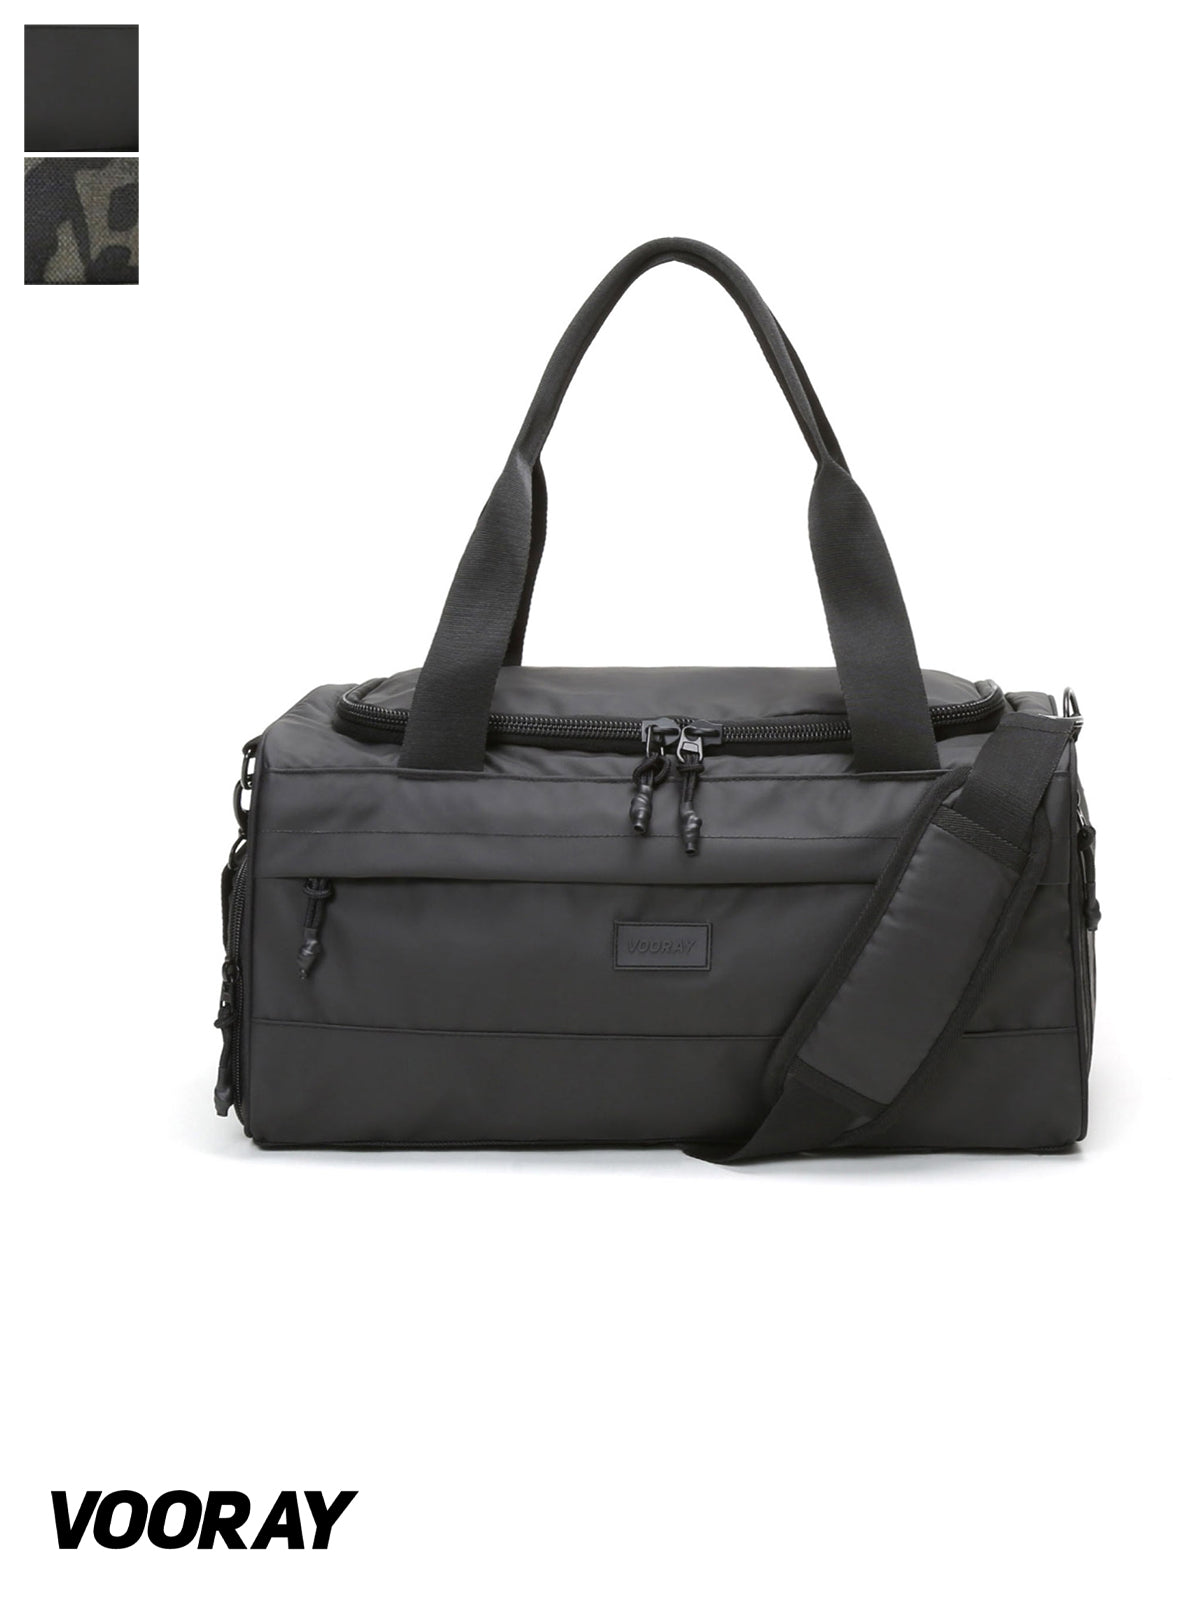 [VOORAY] BOOST DUFFEL / Boston bag, shoulder bag